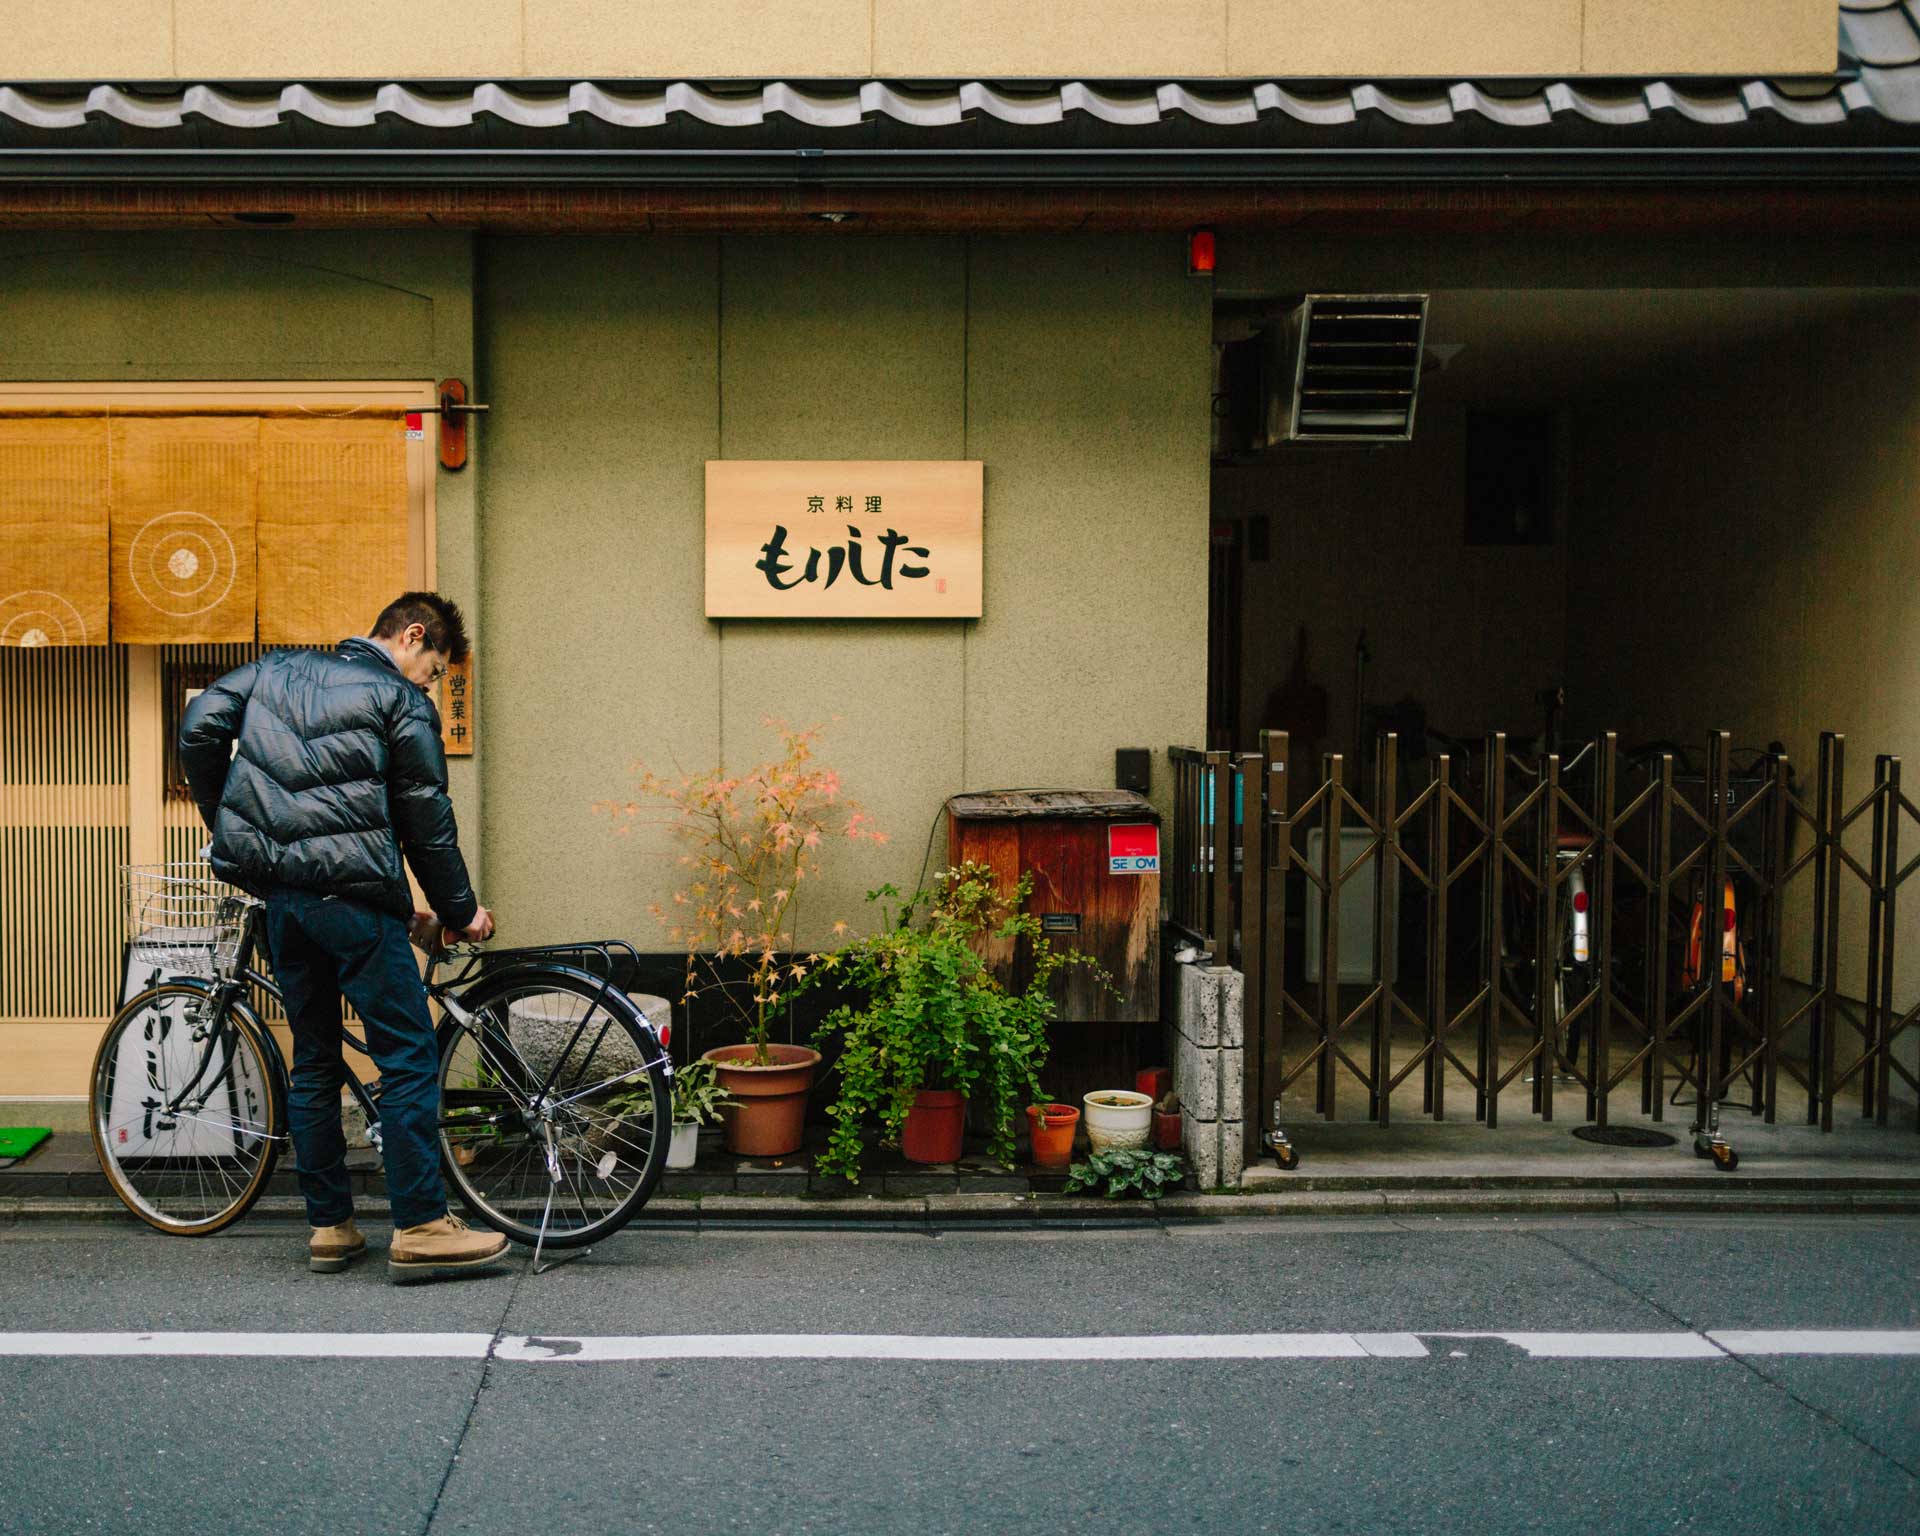 Kyoto alleyways